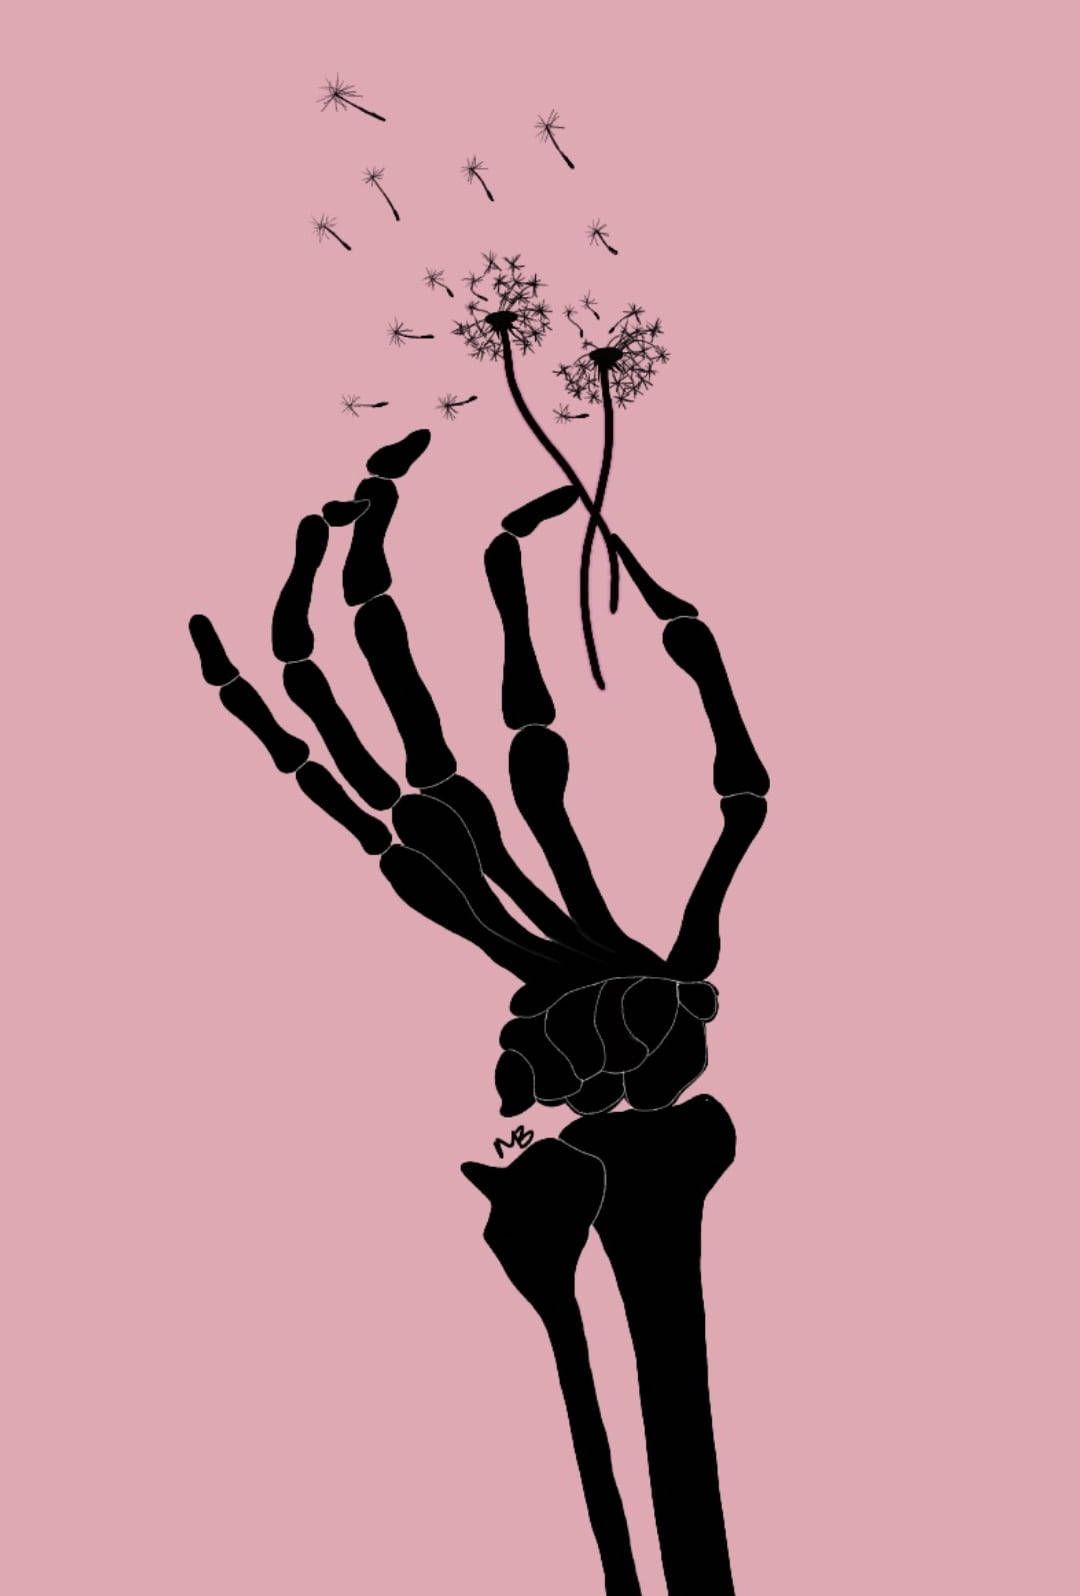 Skeleton hand holding a dandelion wallpaper background phone wallpaper - Skeleton